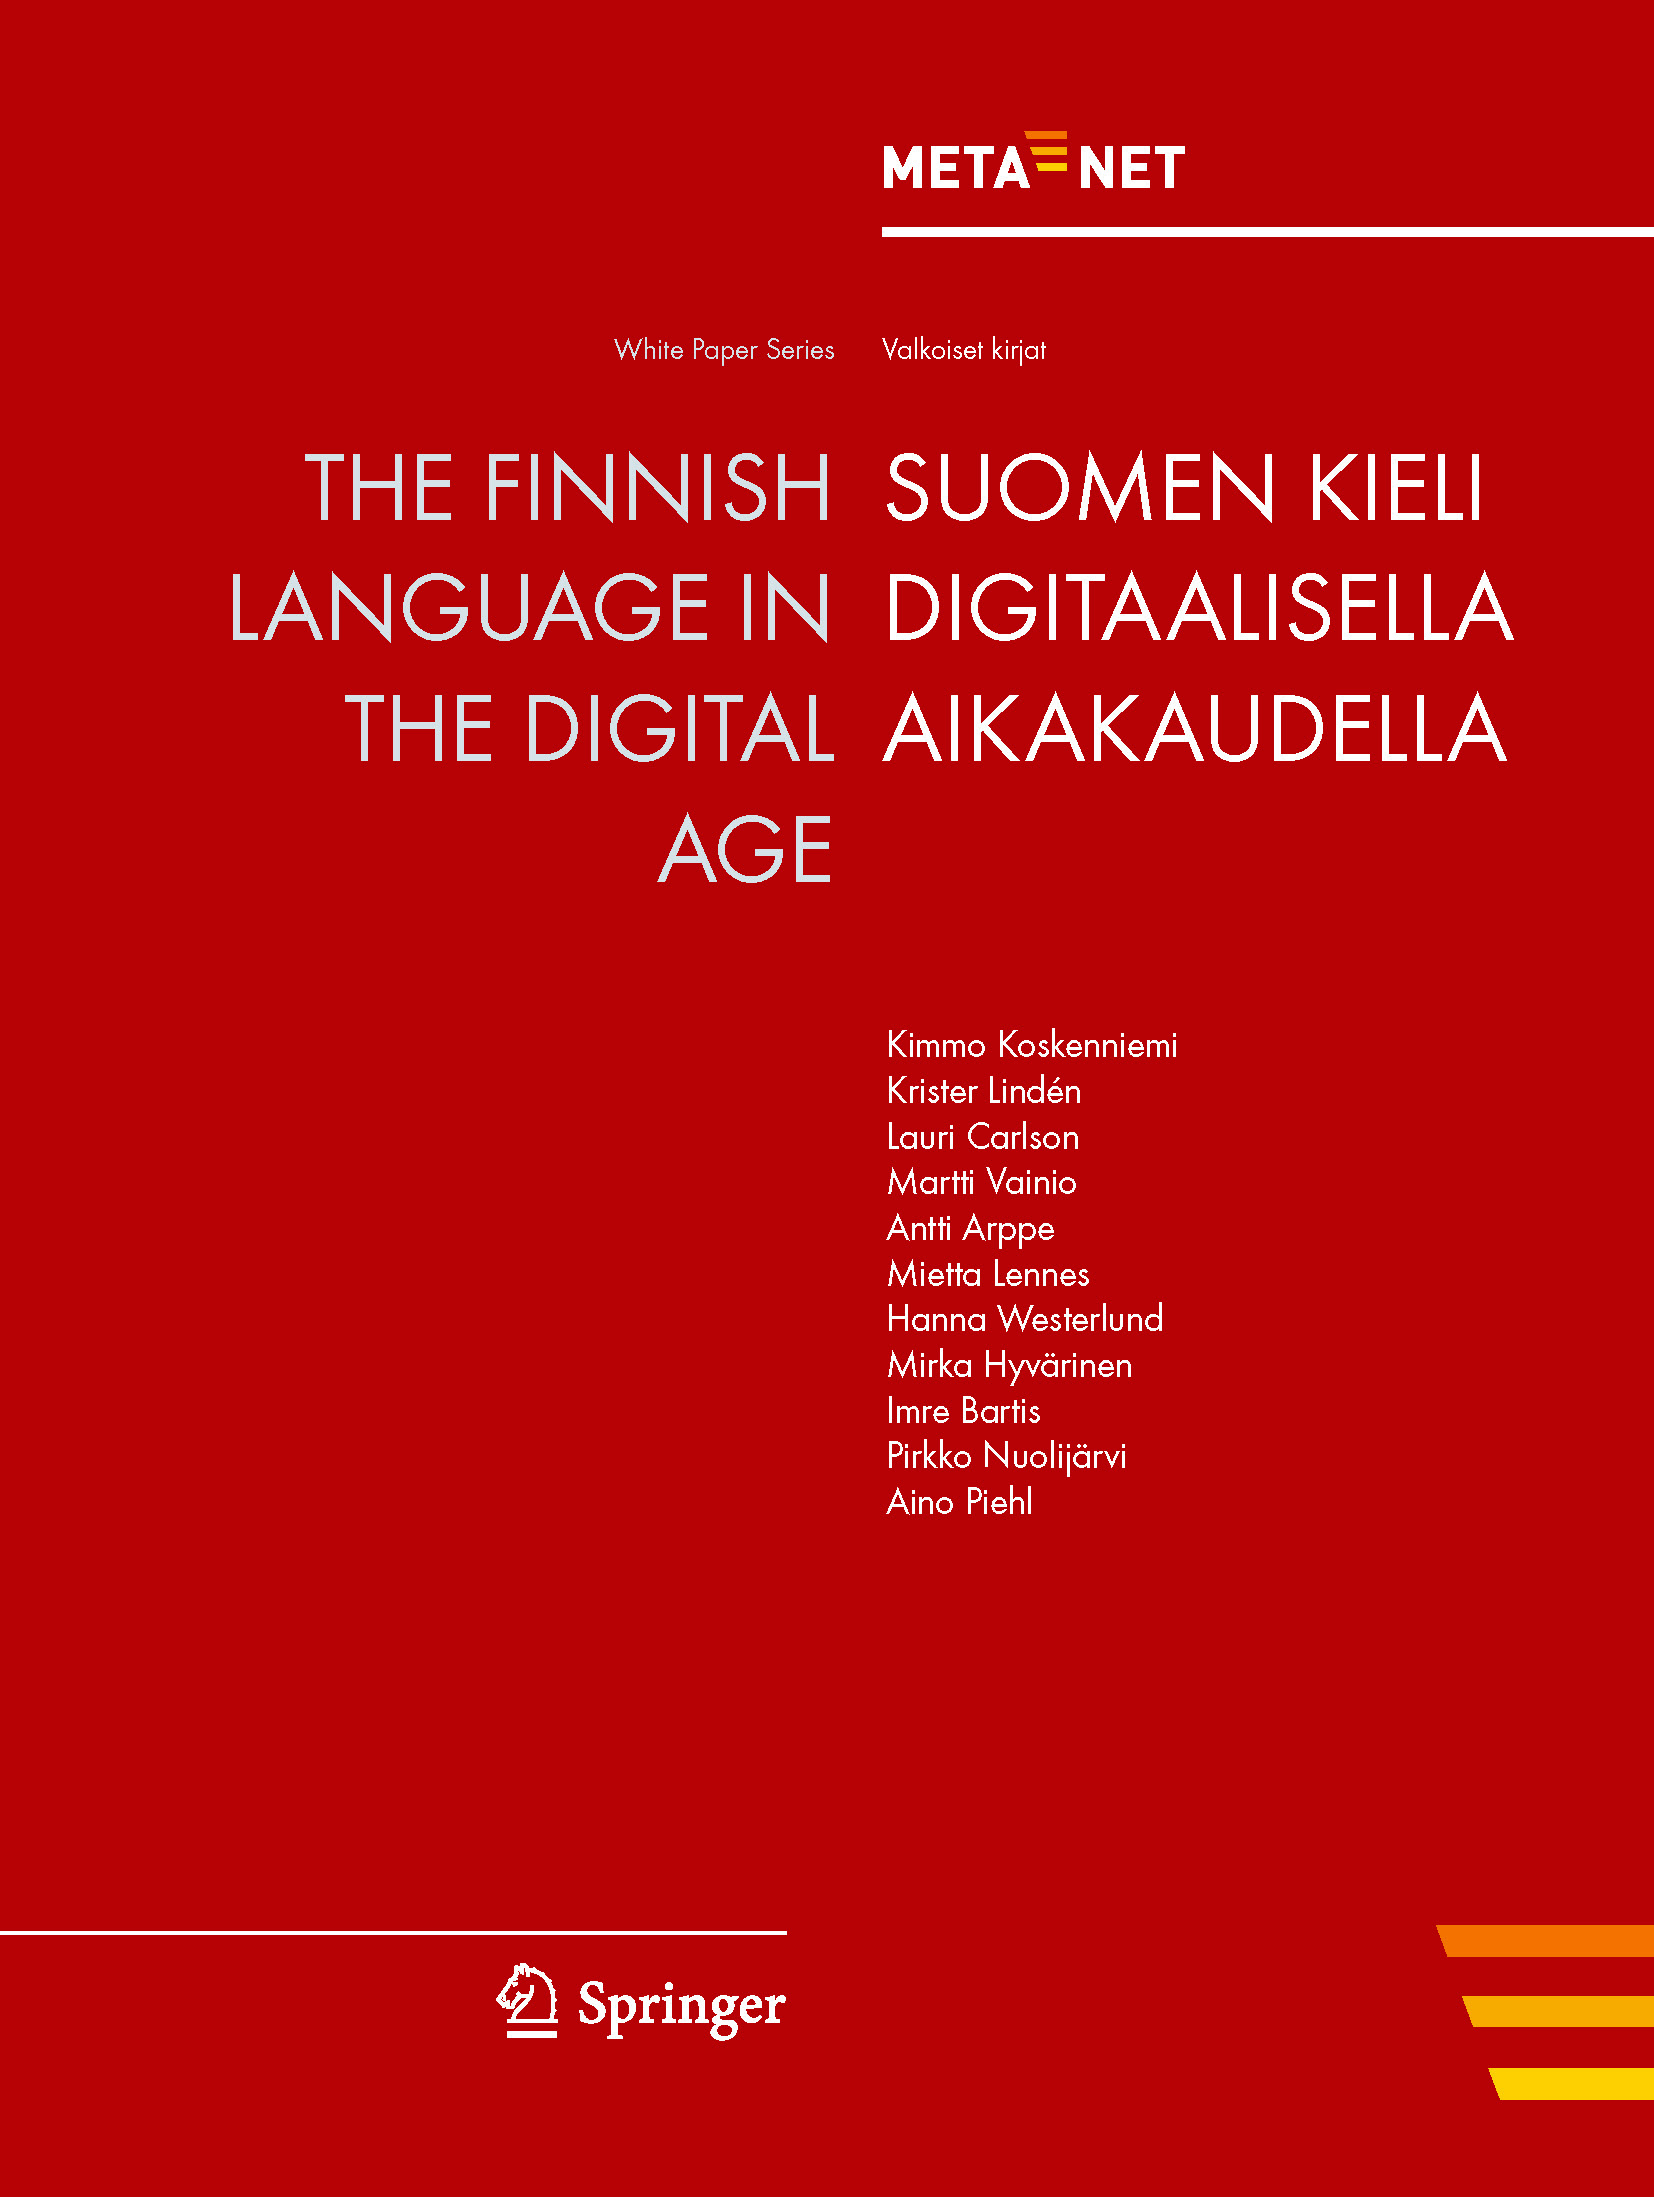 Cover of Finnish whitepaper